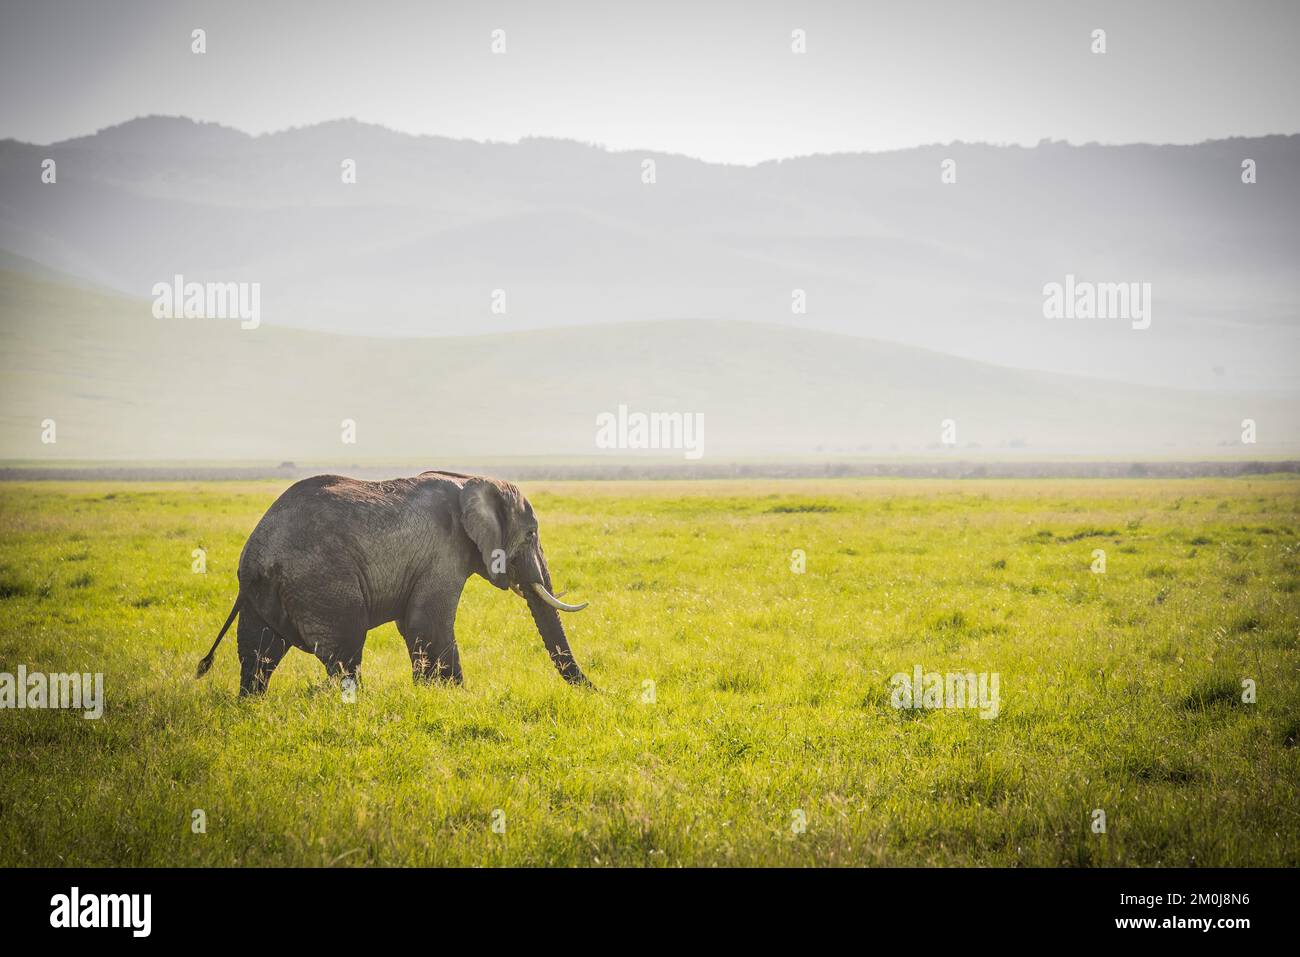 Elephant in the African savanna Stock Photo